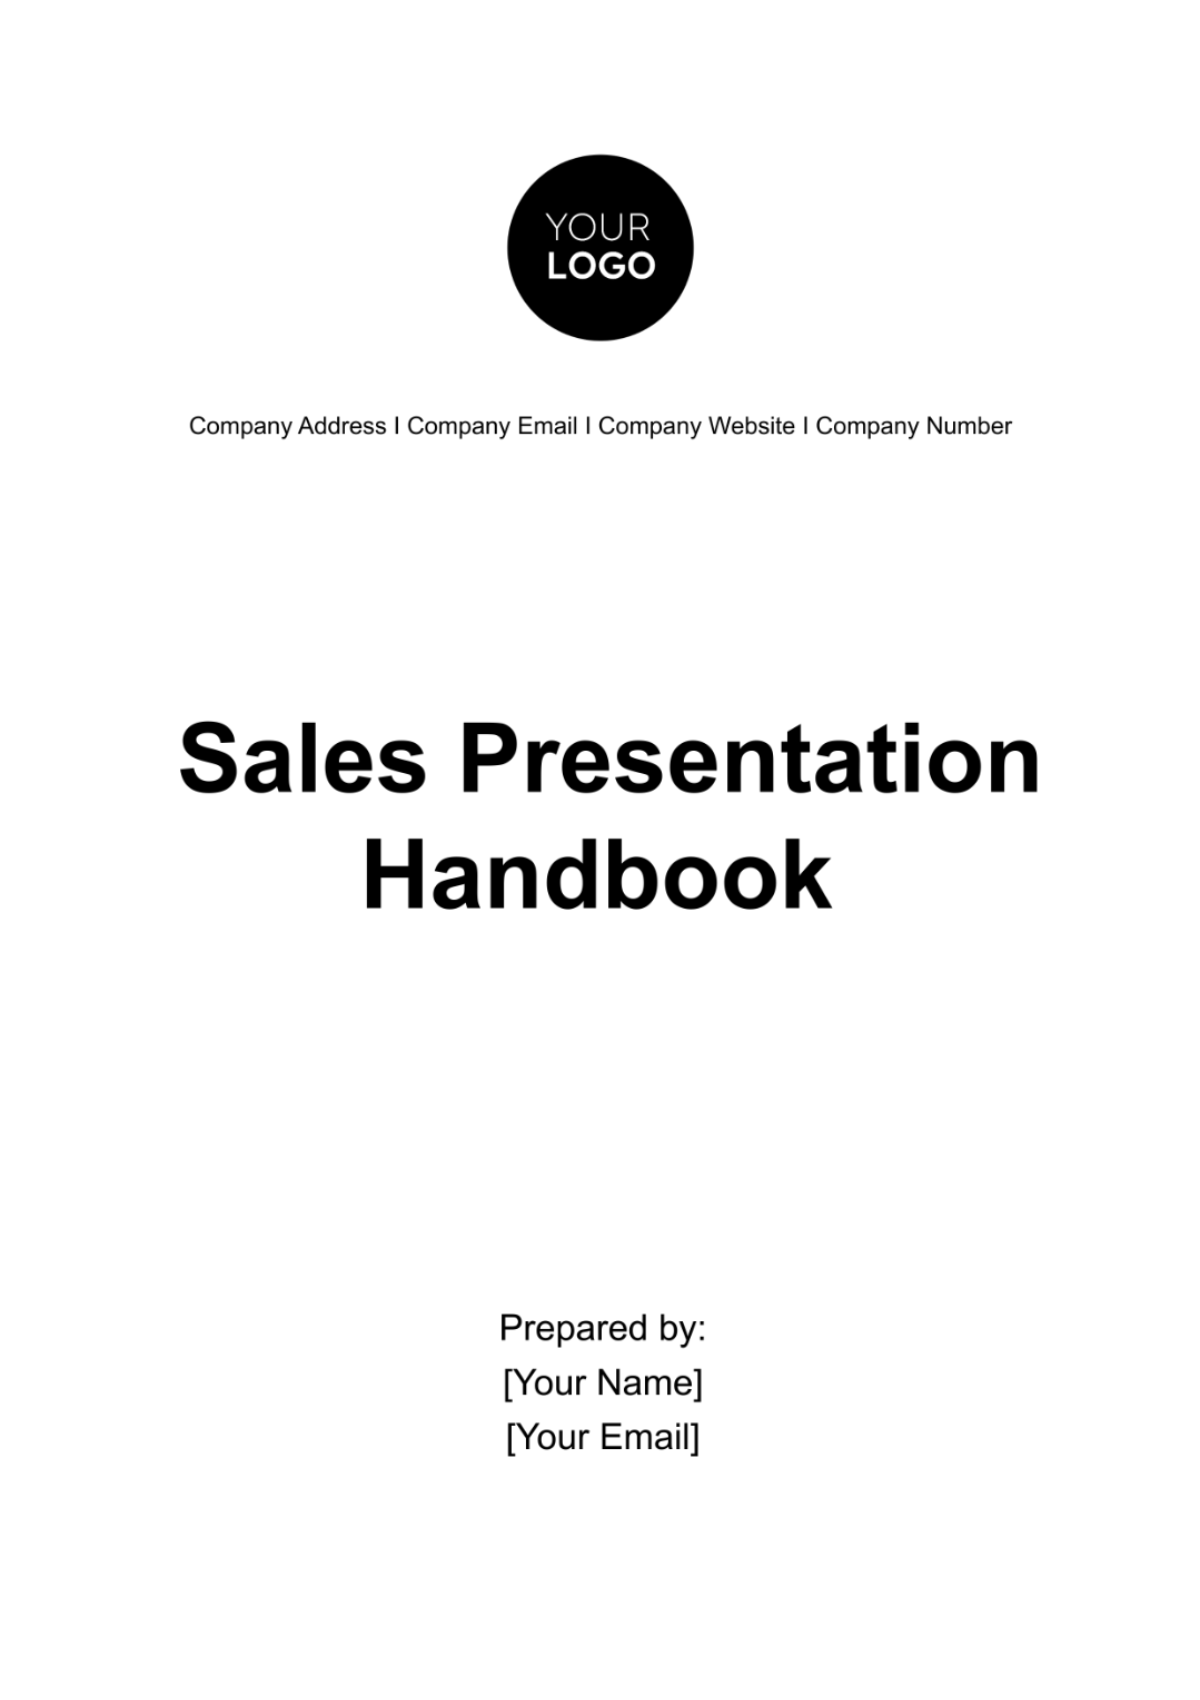 Free Sales Presentation Handbook Template